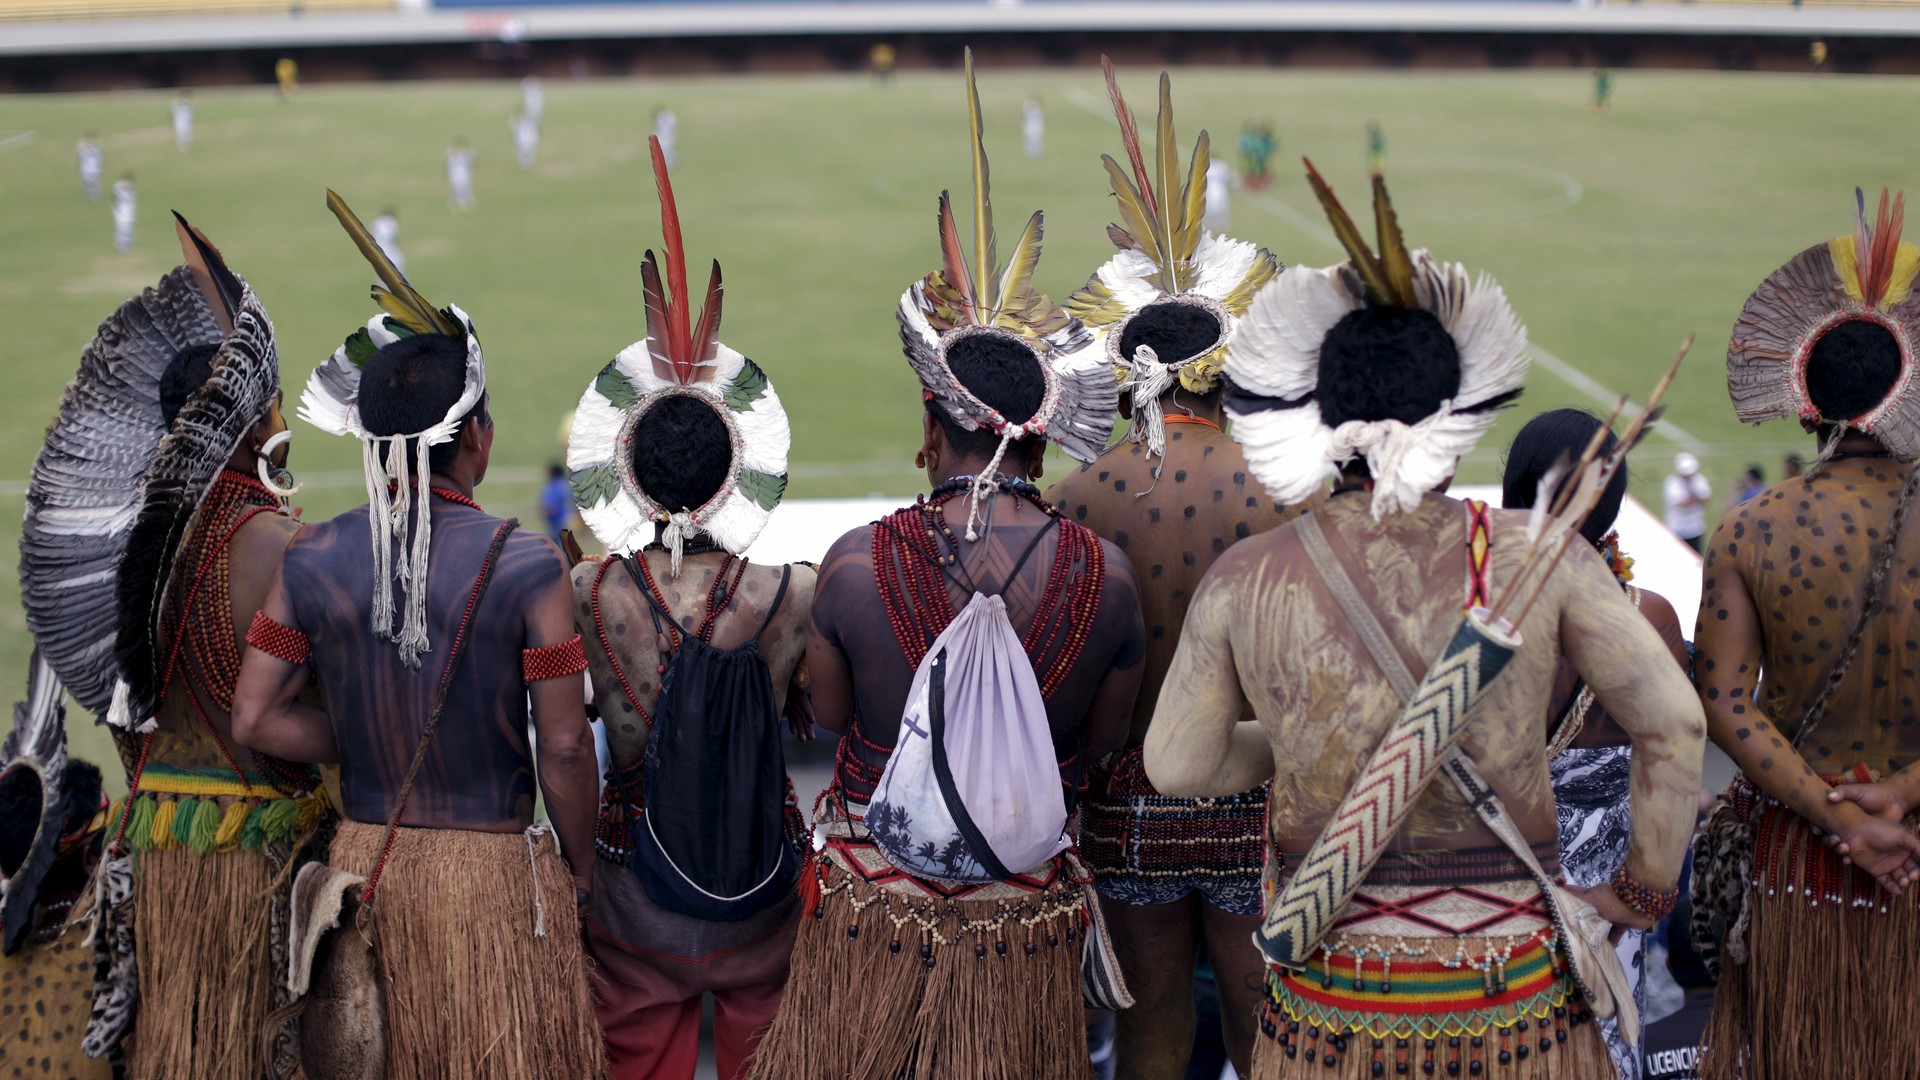 Des autochtones de la tribu Pataxo se mesurent au football contre la tribu Xerente